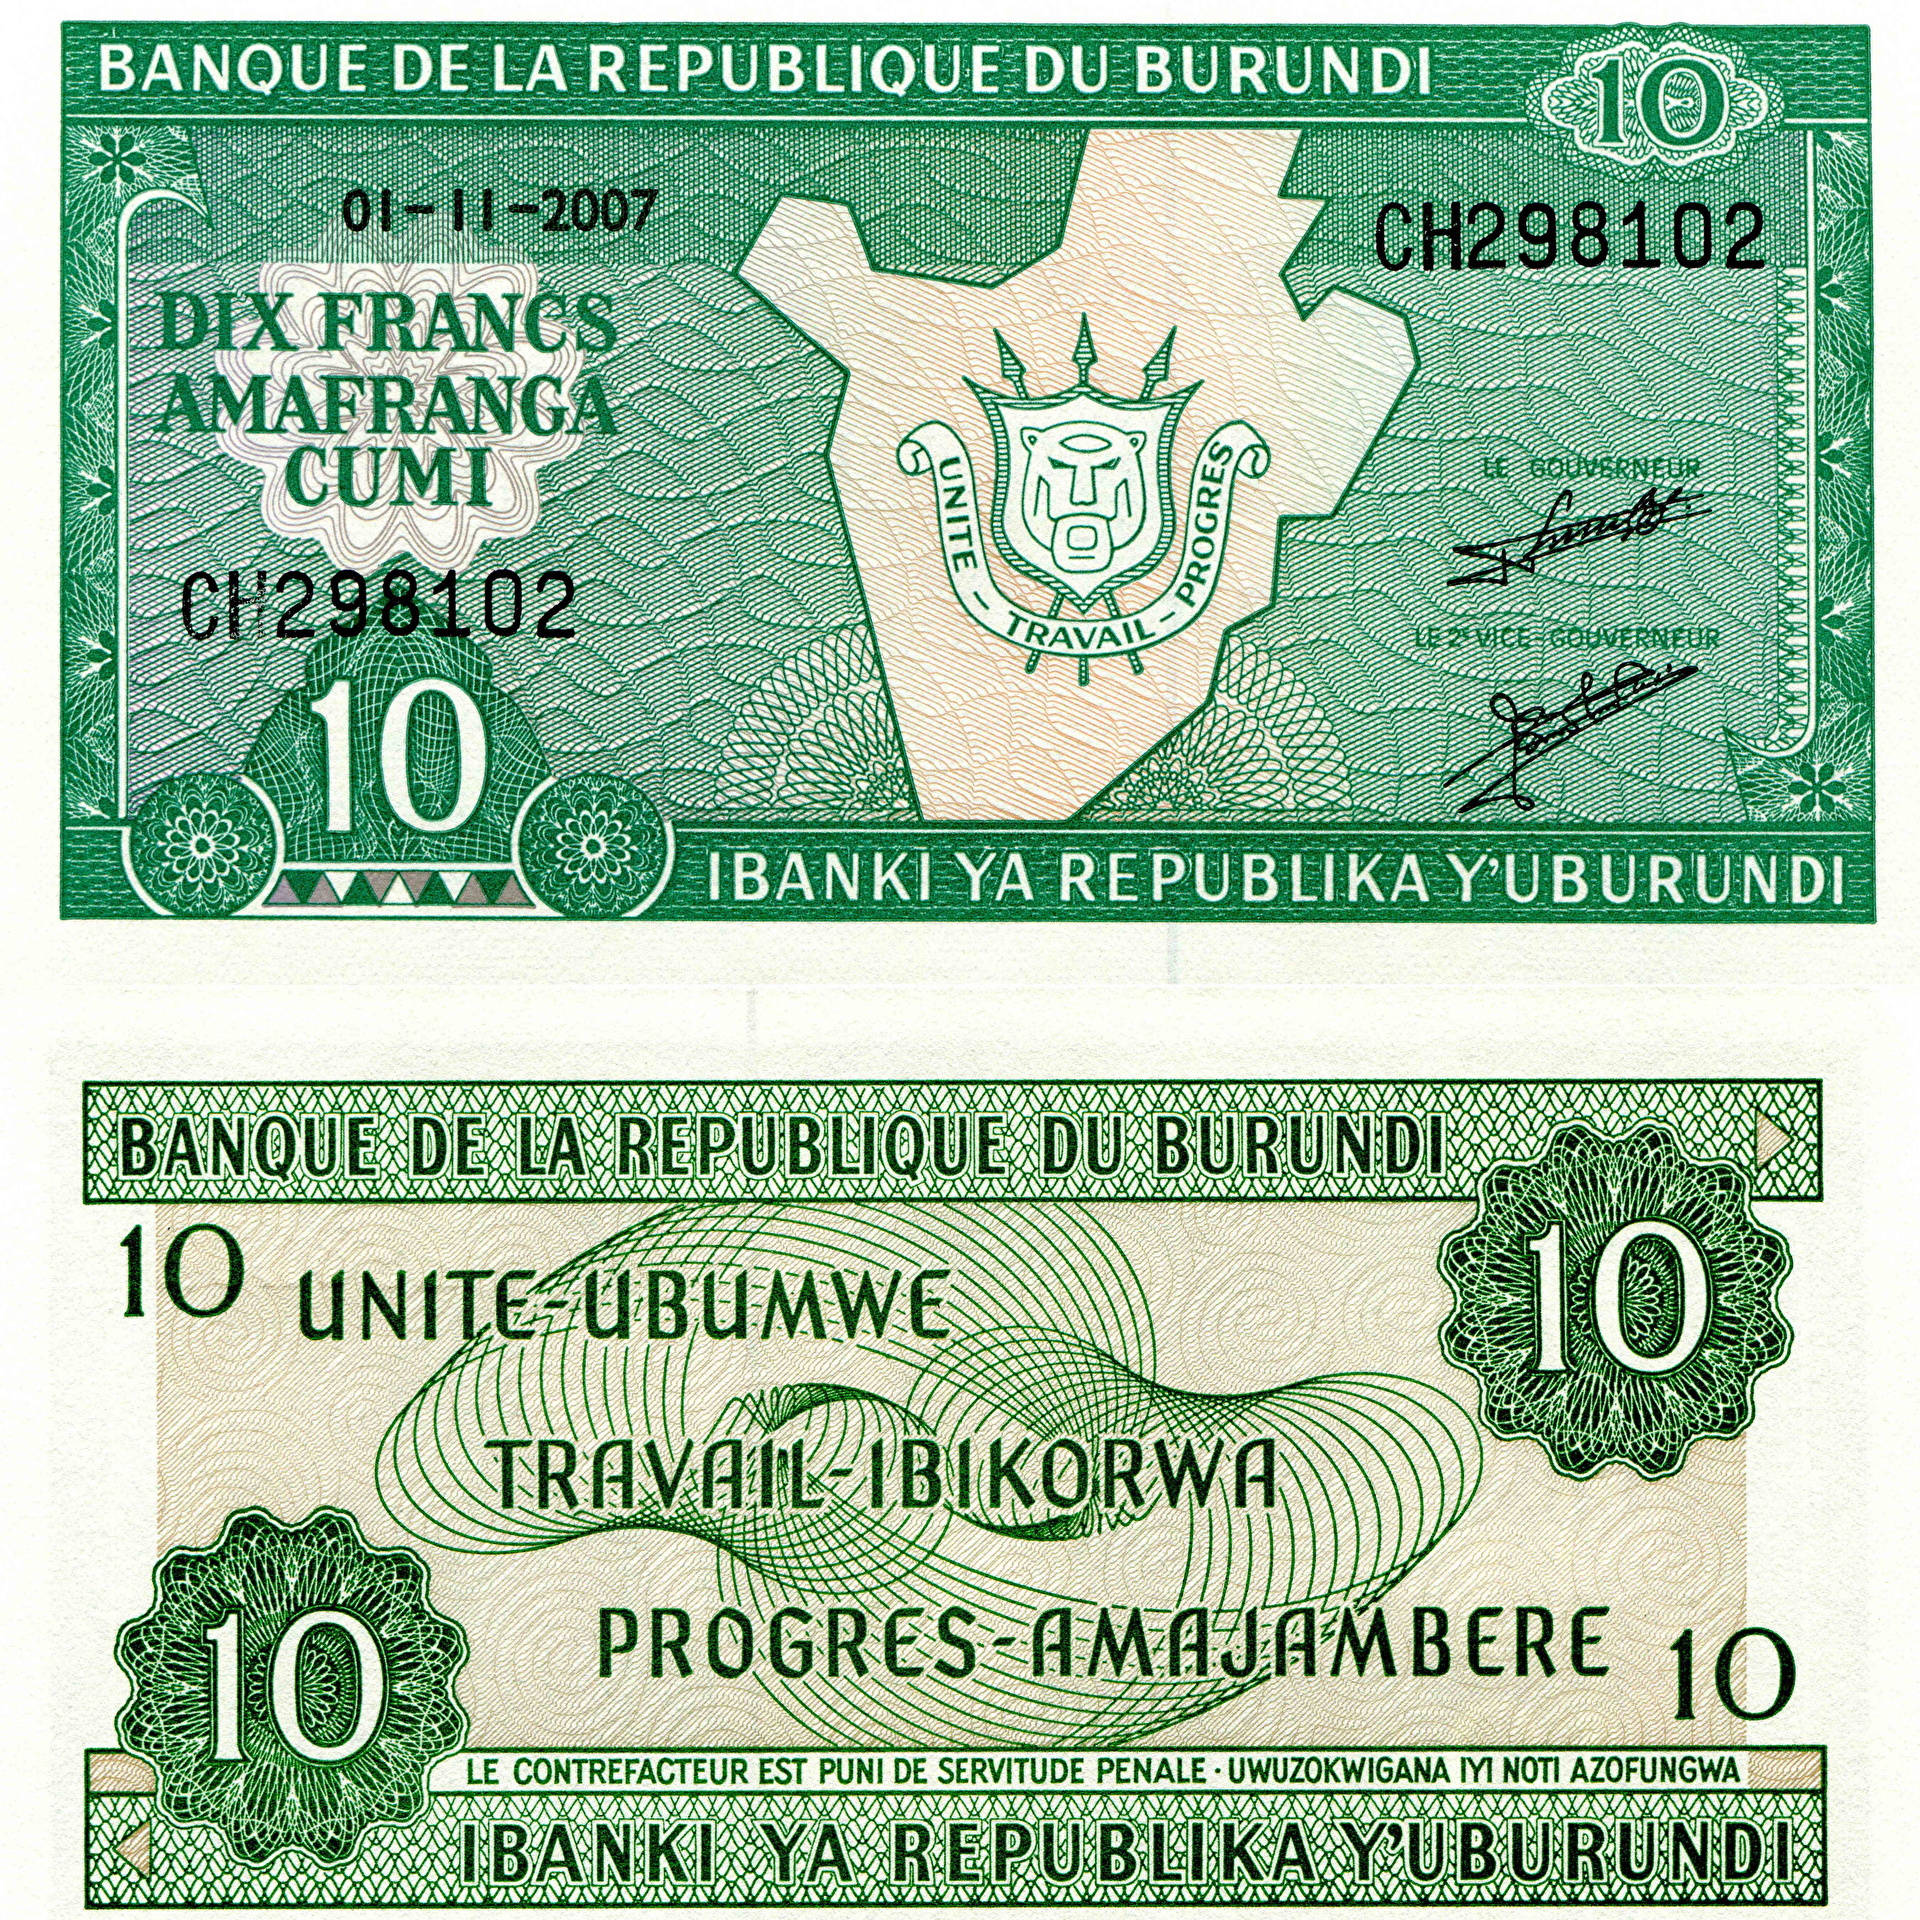 Burundi Franc Currency Background